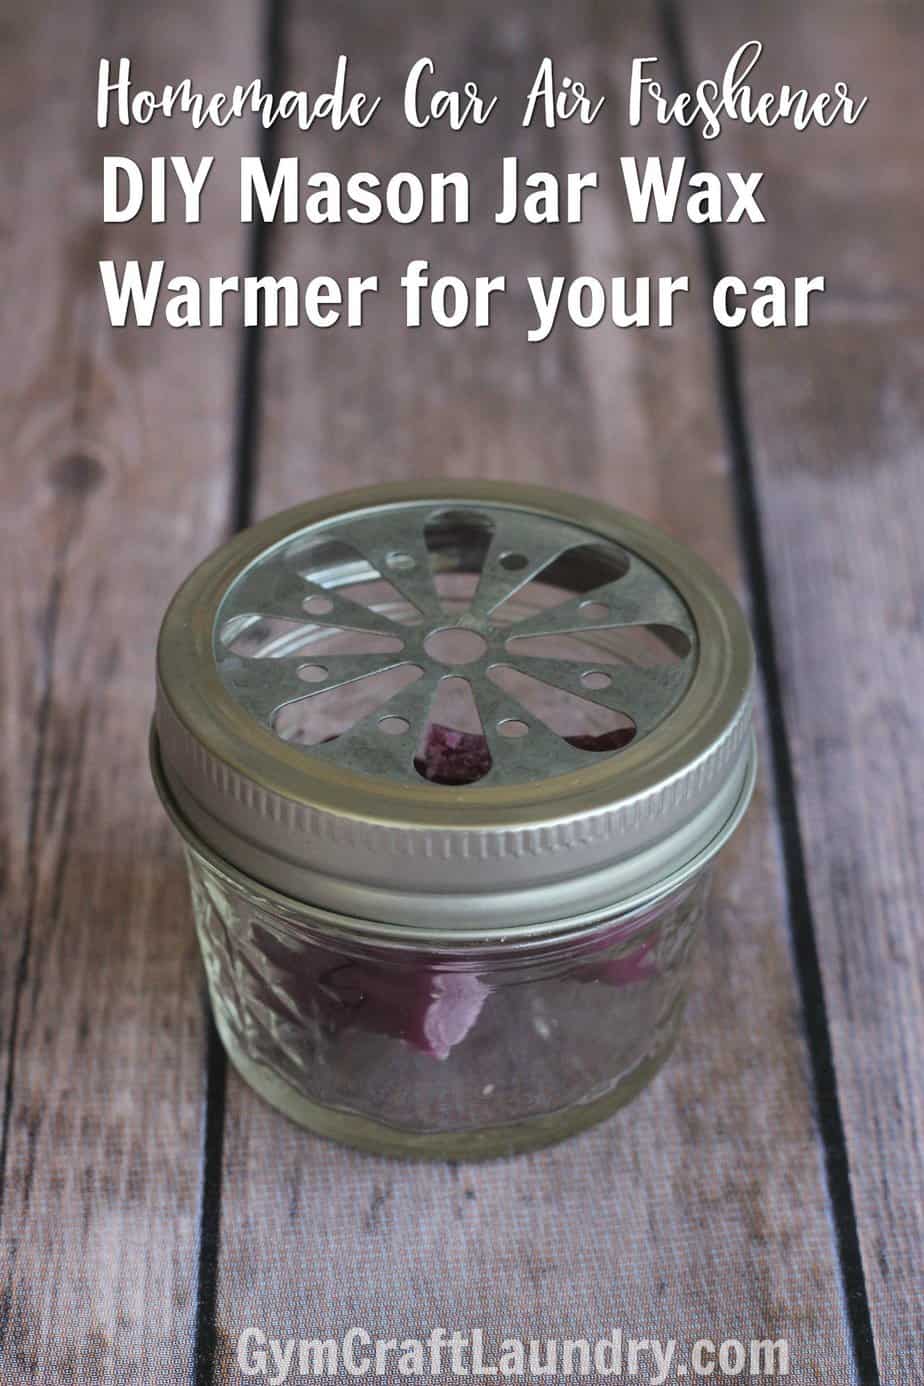 Homemade-Car-Air-Freshener-DIY-Mason-Jar-Wax-Warmer-1-1